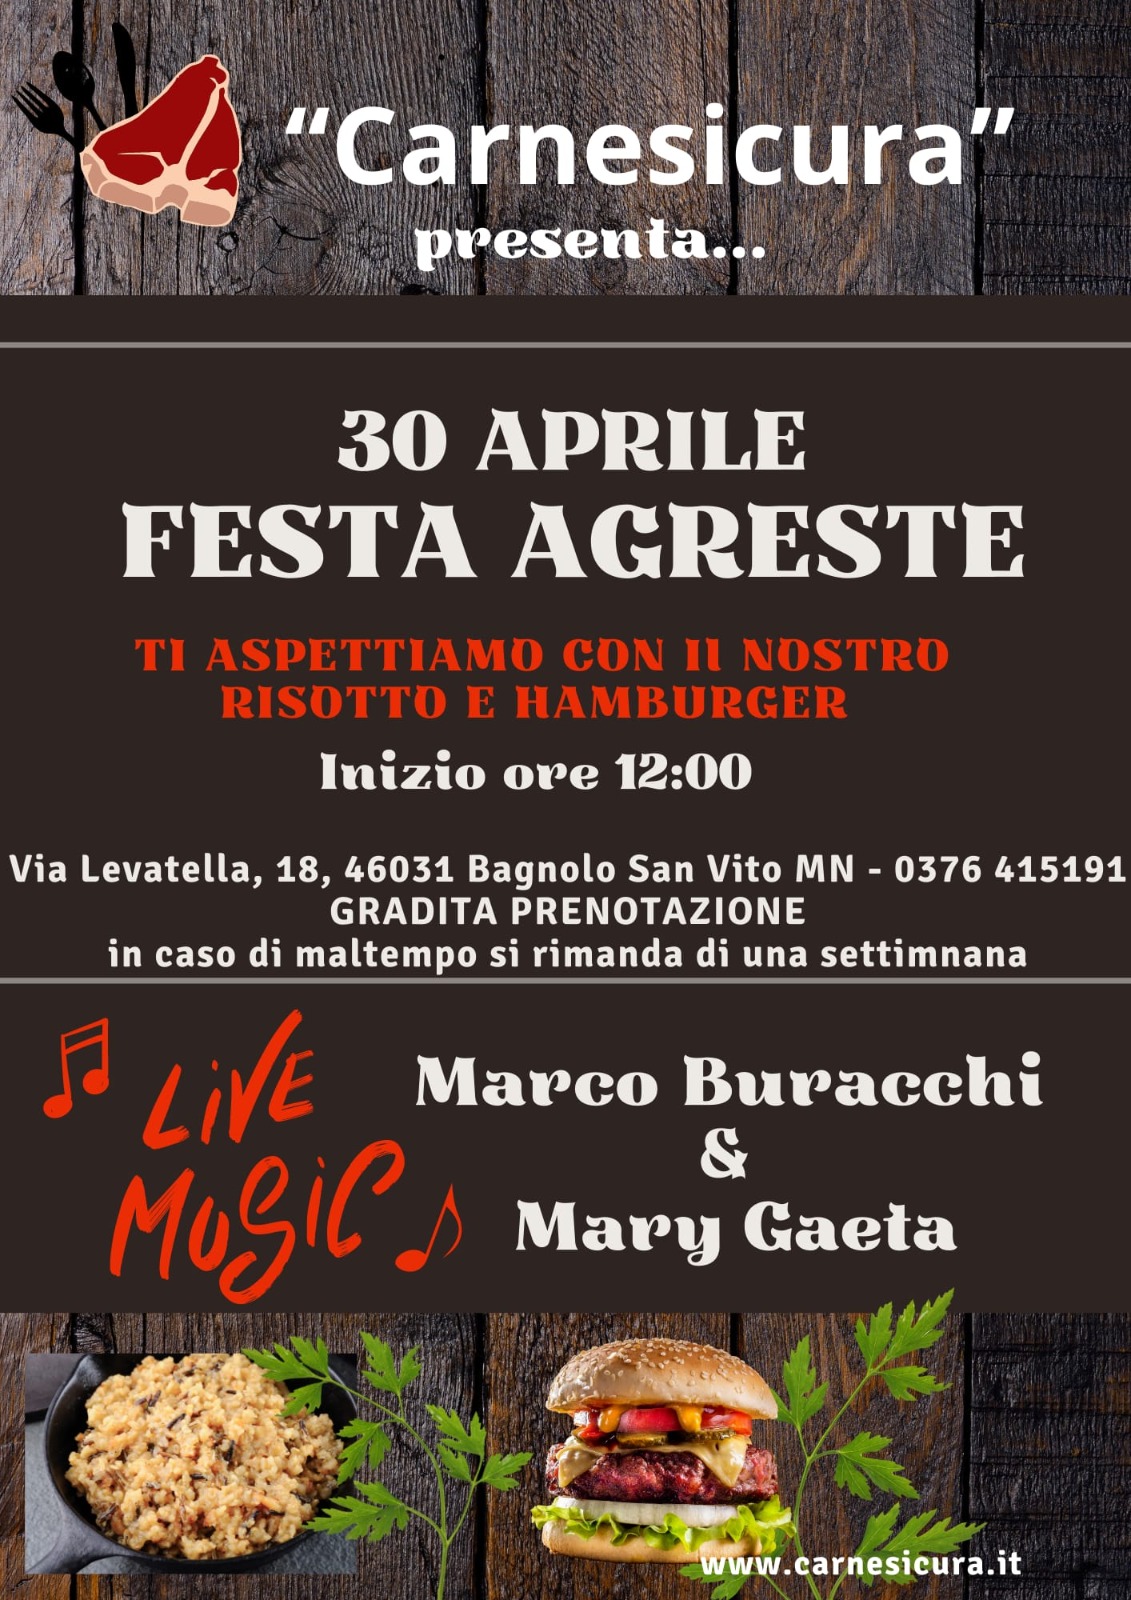 CARNE SICURA presenta la Prima Festa Agreste & LIVE MUSIC